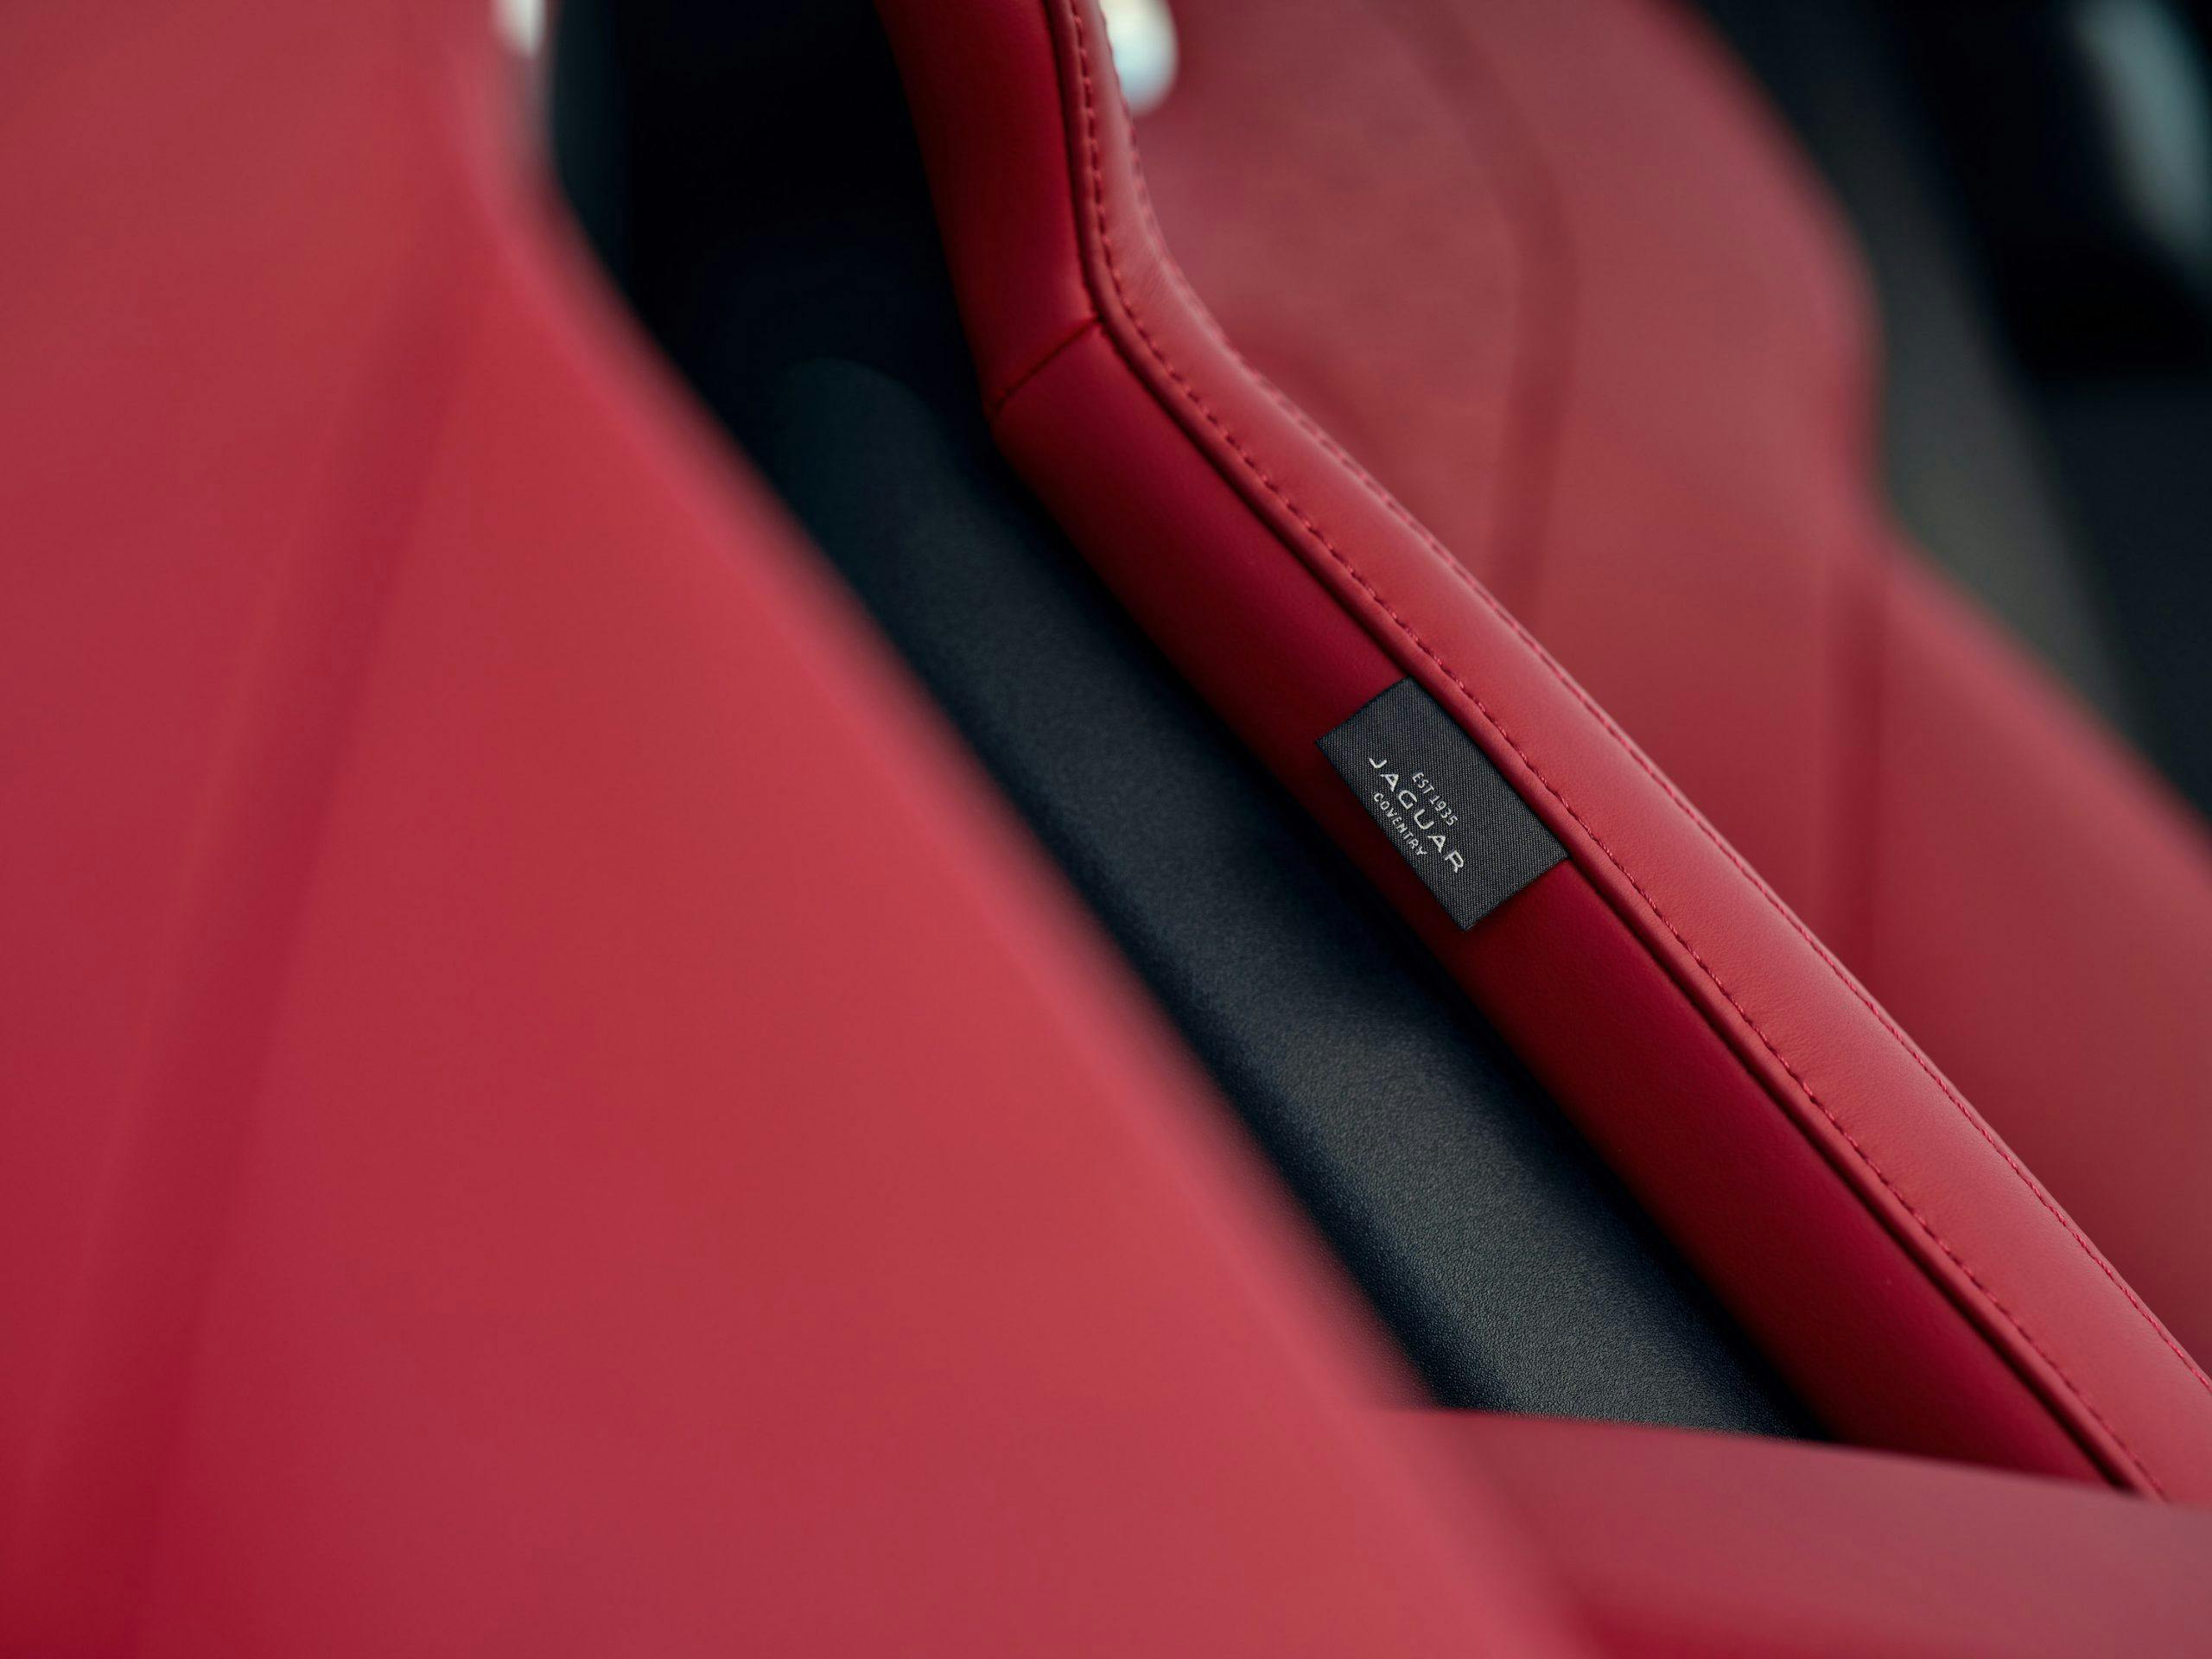 2021 Jaguar F-PACE interior seat leather detail